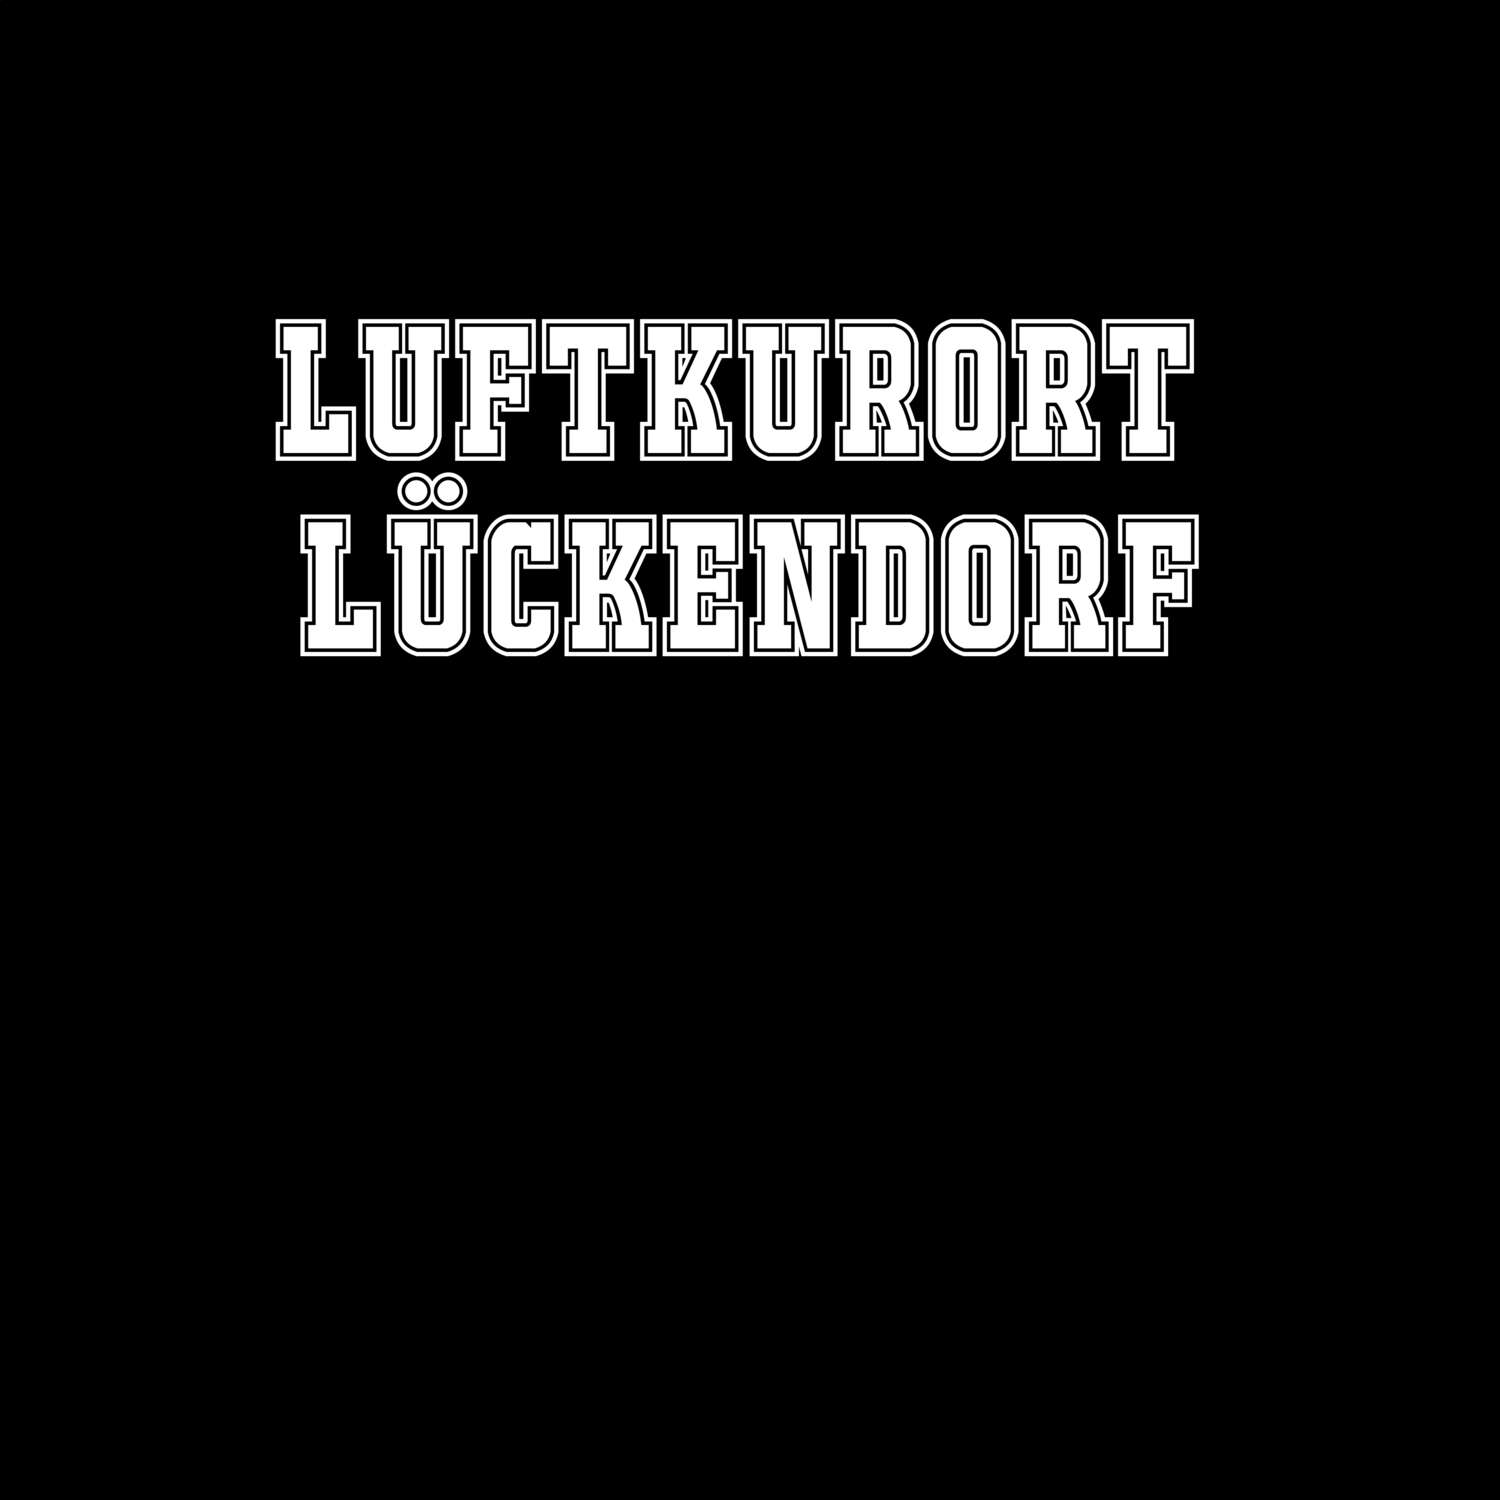 Luftkurort Lückendorf T-Shirt »Classic«